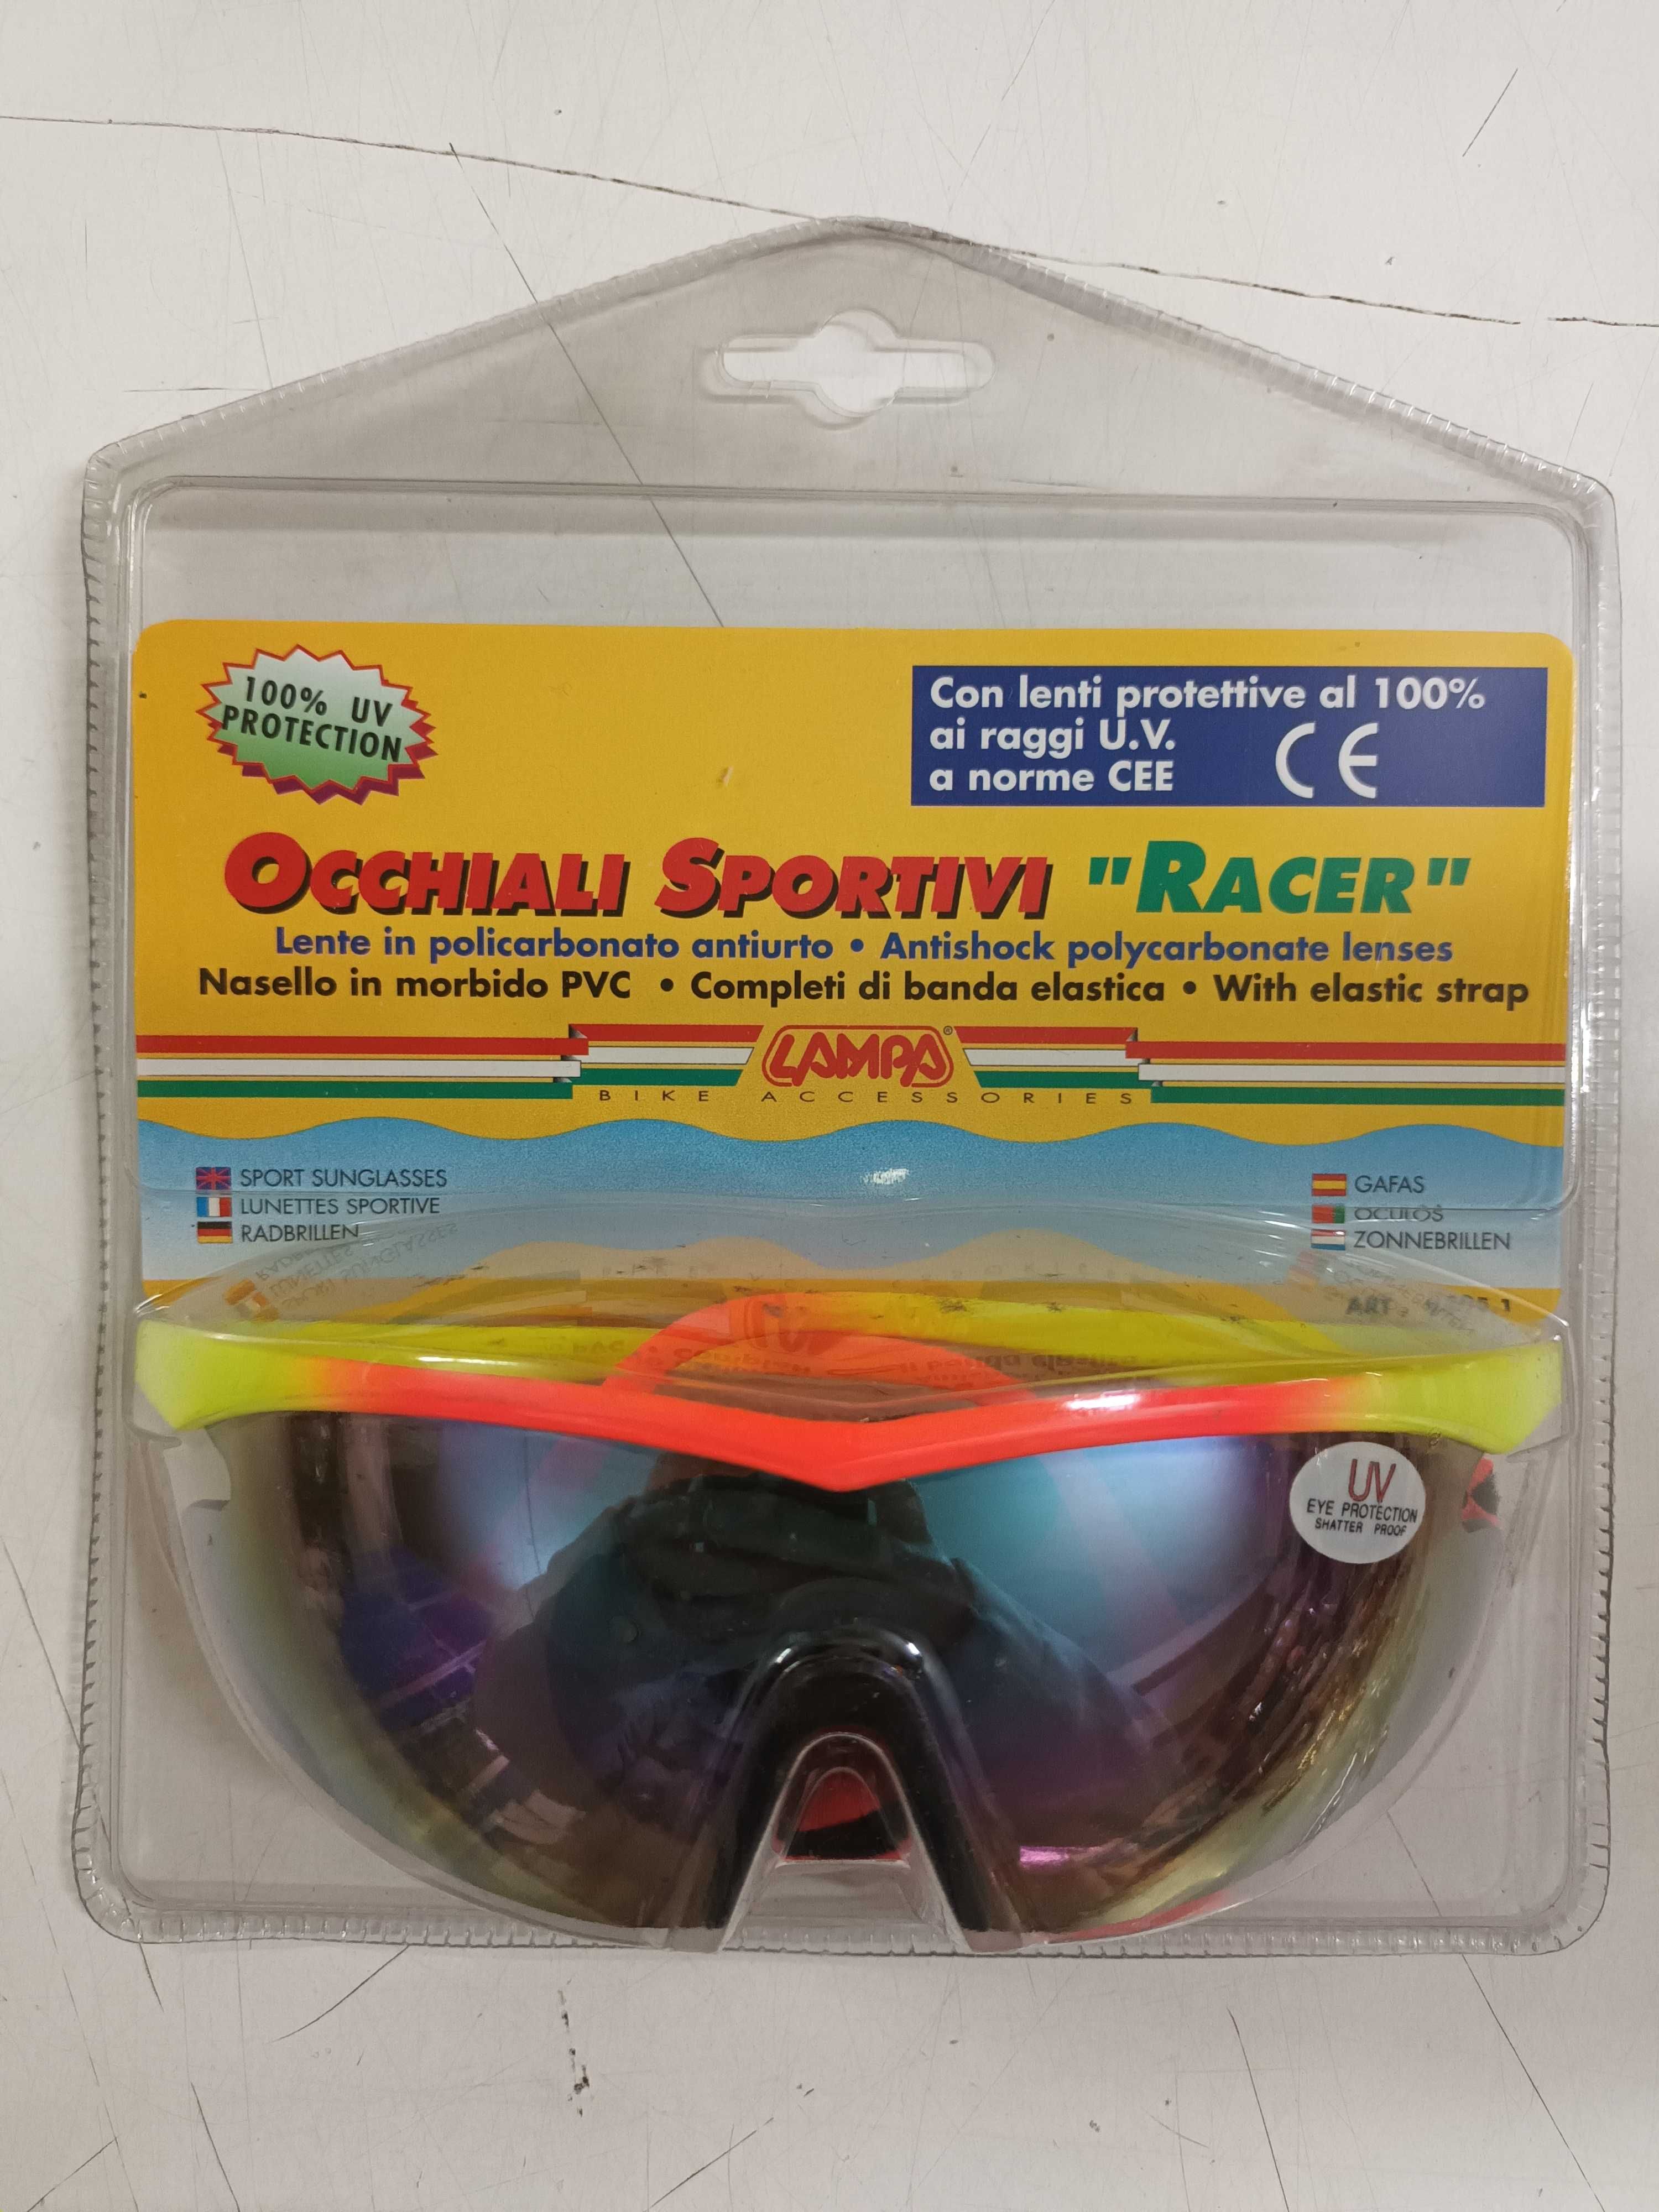 Oculos Desportivos "Racer"